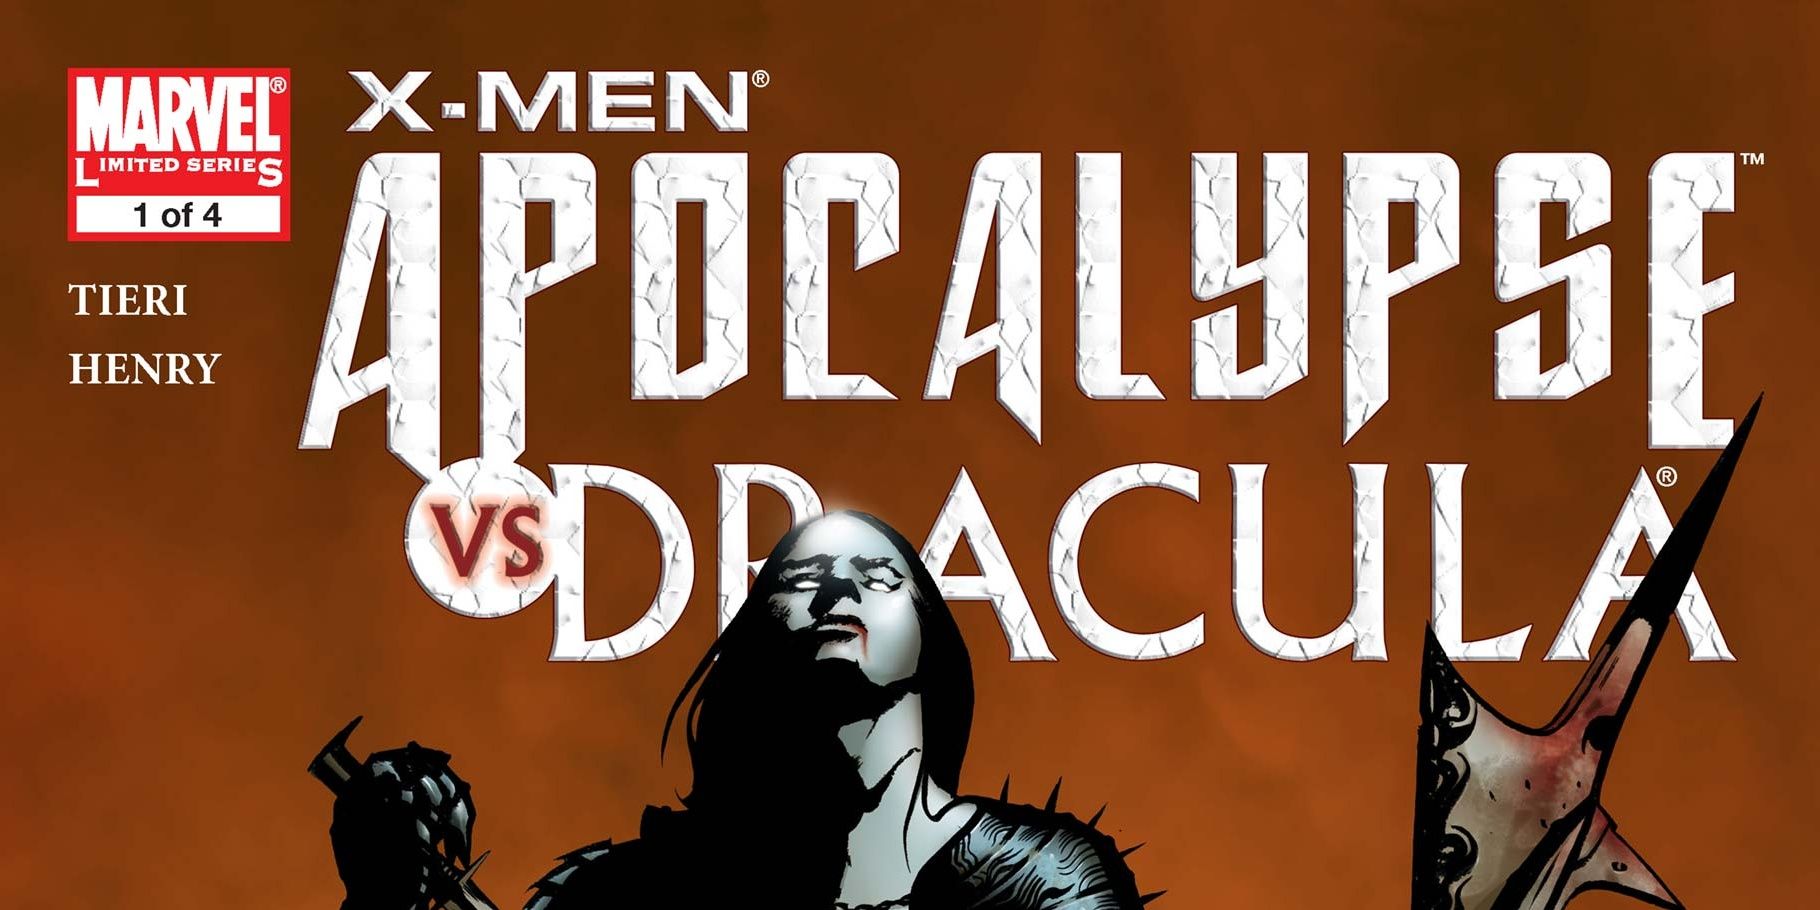 Dracula on the cover of Marvel's X-Men: Apocalypse vs. Dracula